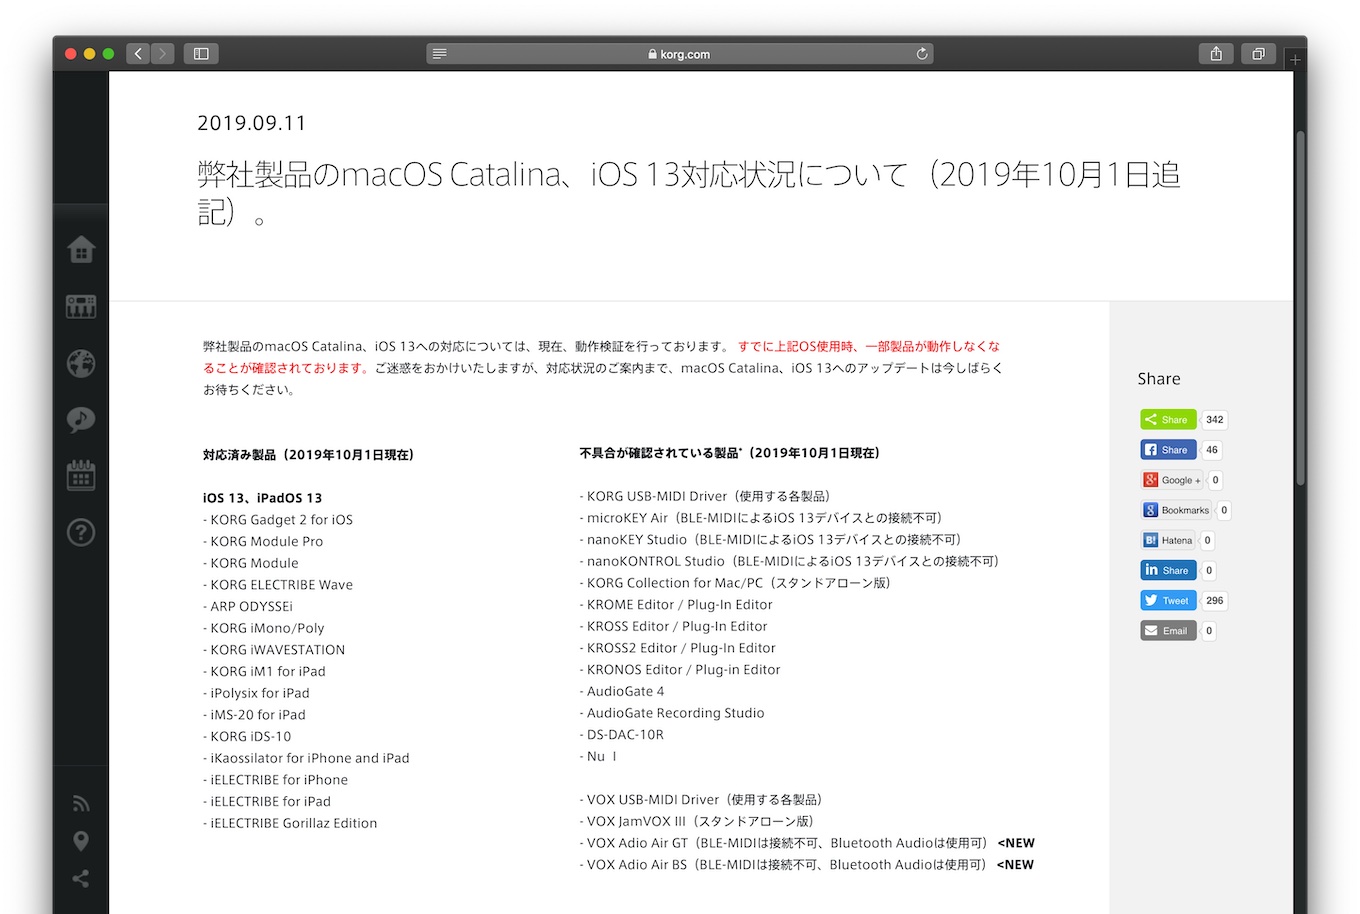 KORGのmacOS Catalina、iOS 13対応状況について。